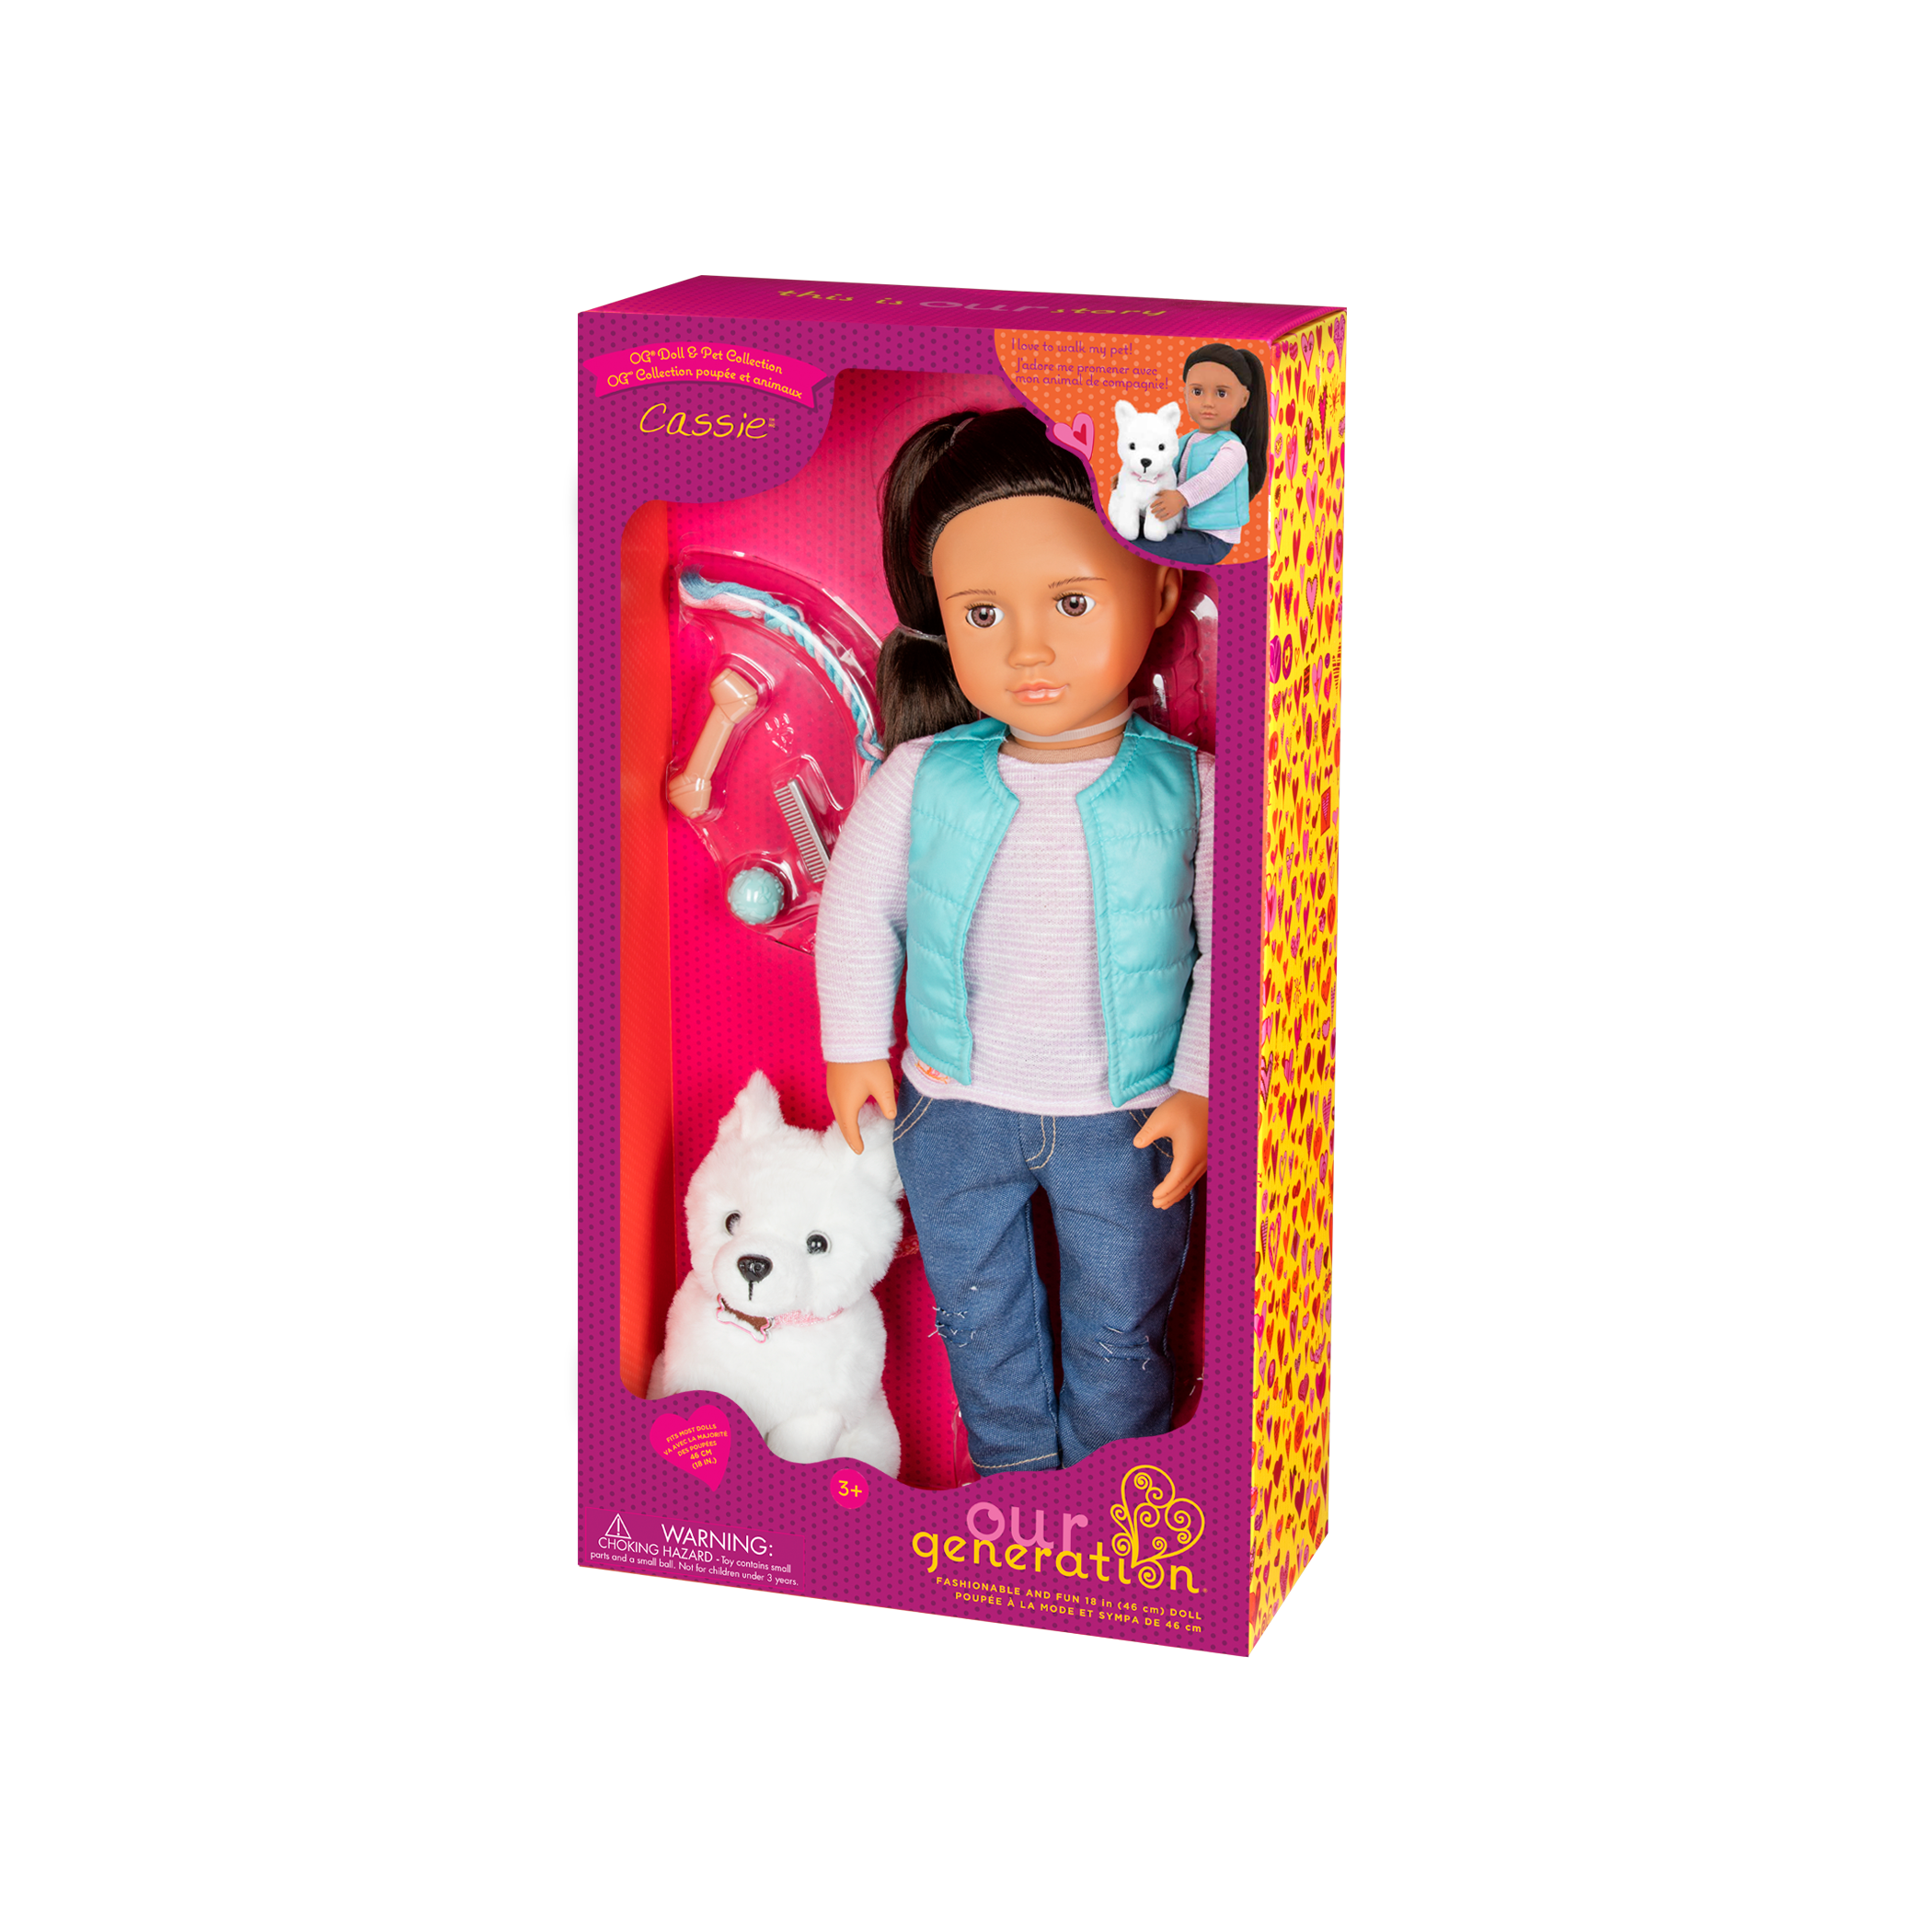 18-inch doll with dark-brown hair, hazel eyes and dog accessories walking Samoyed plushie